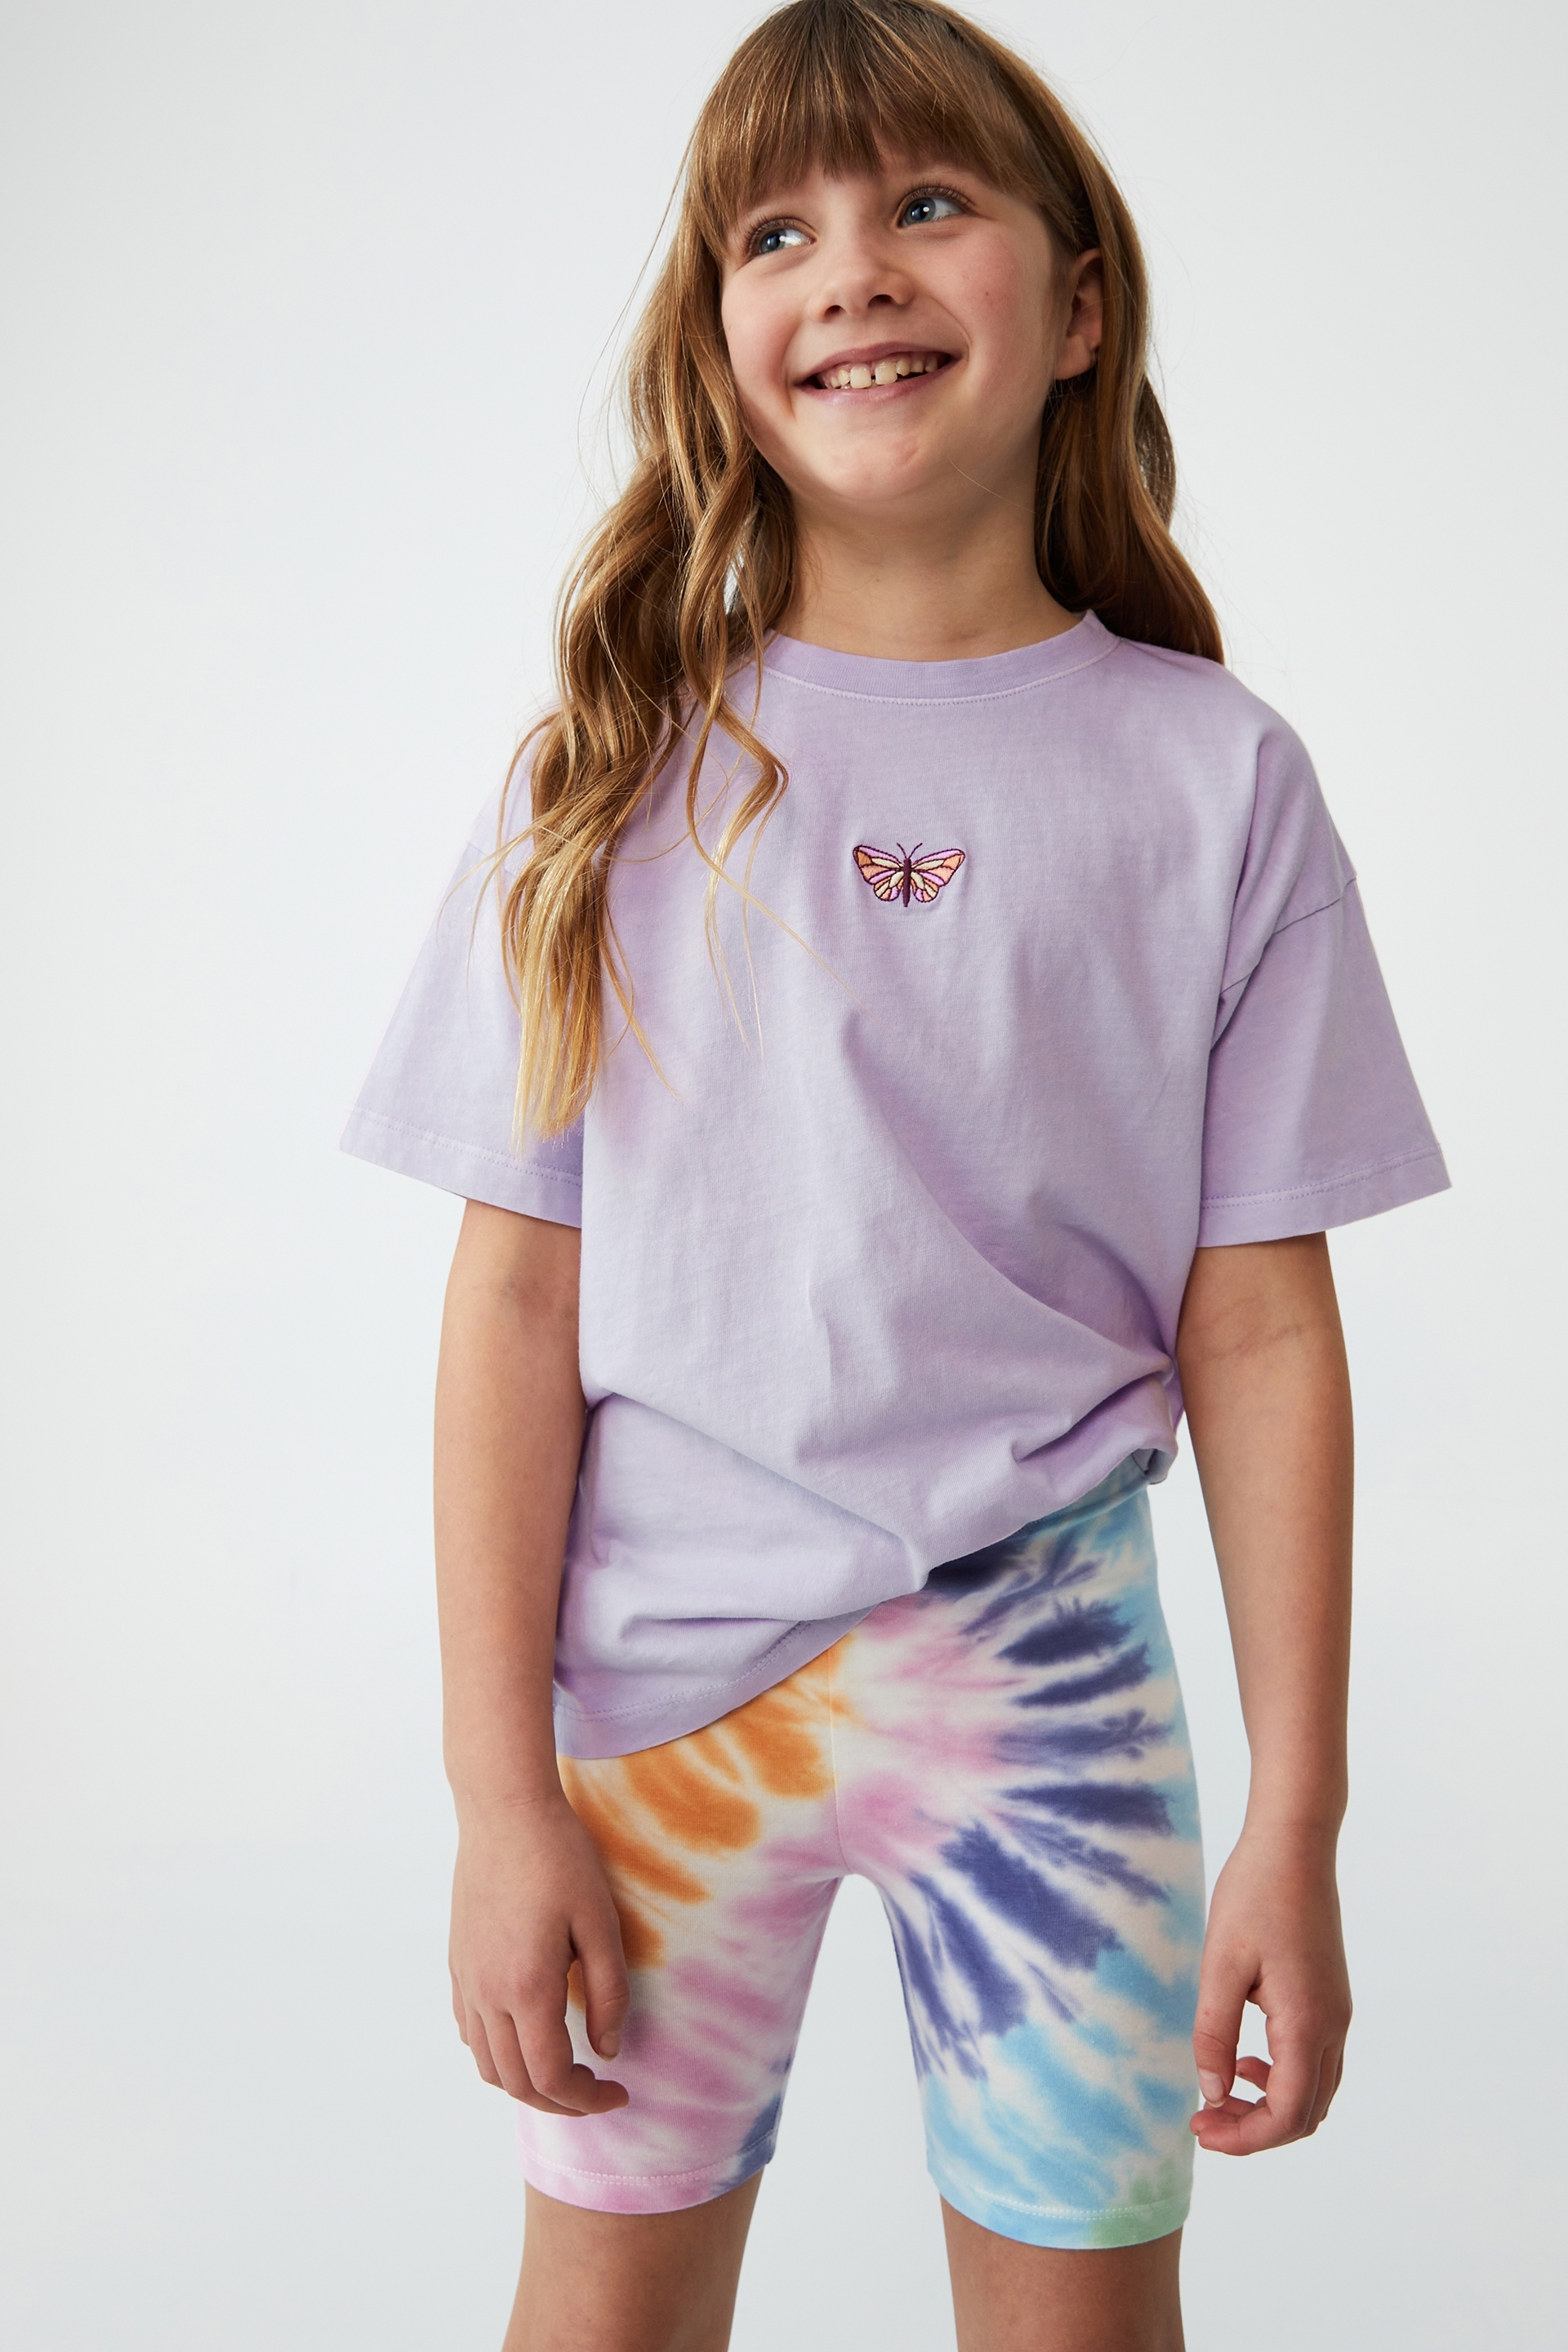 Cotton On Kids - Hailey Bike Short - Aqua spiral tie dye